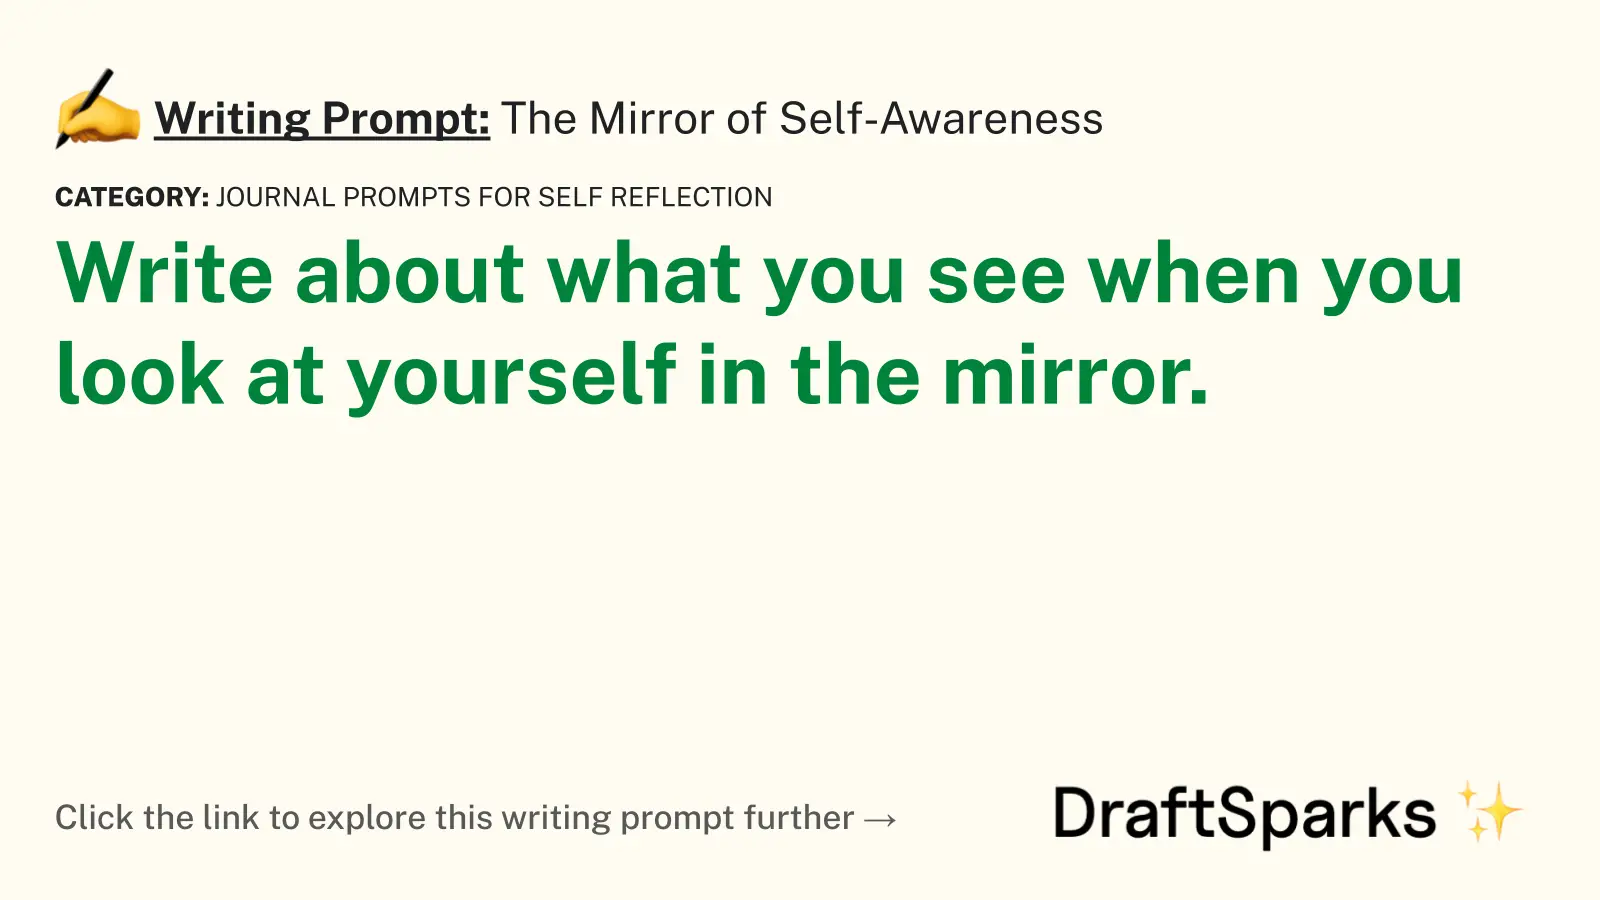 The Mirror of Self-Awareness